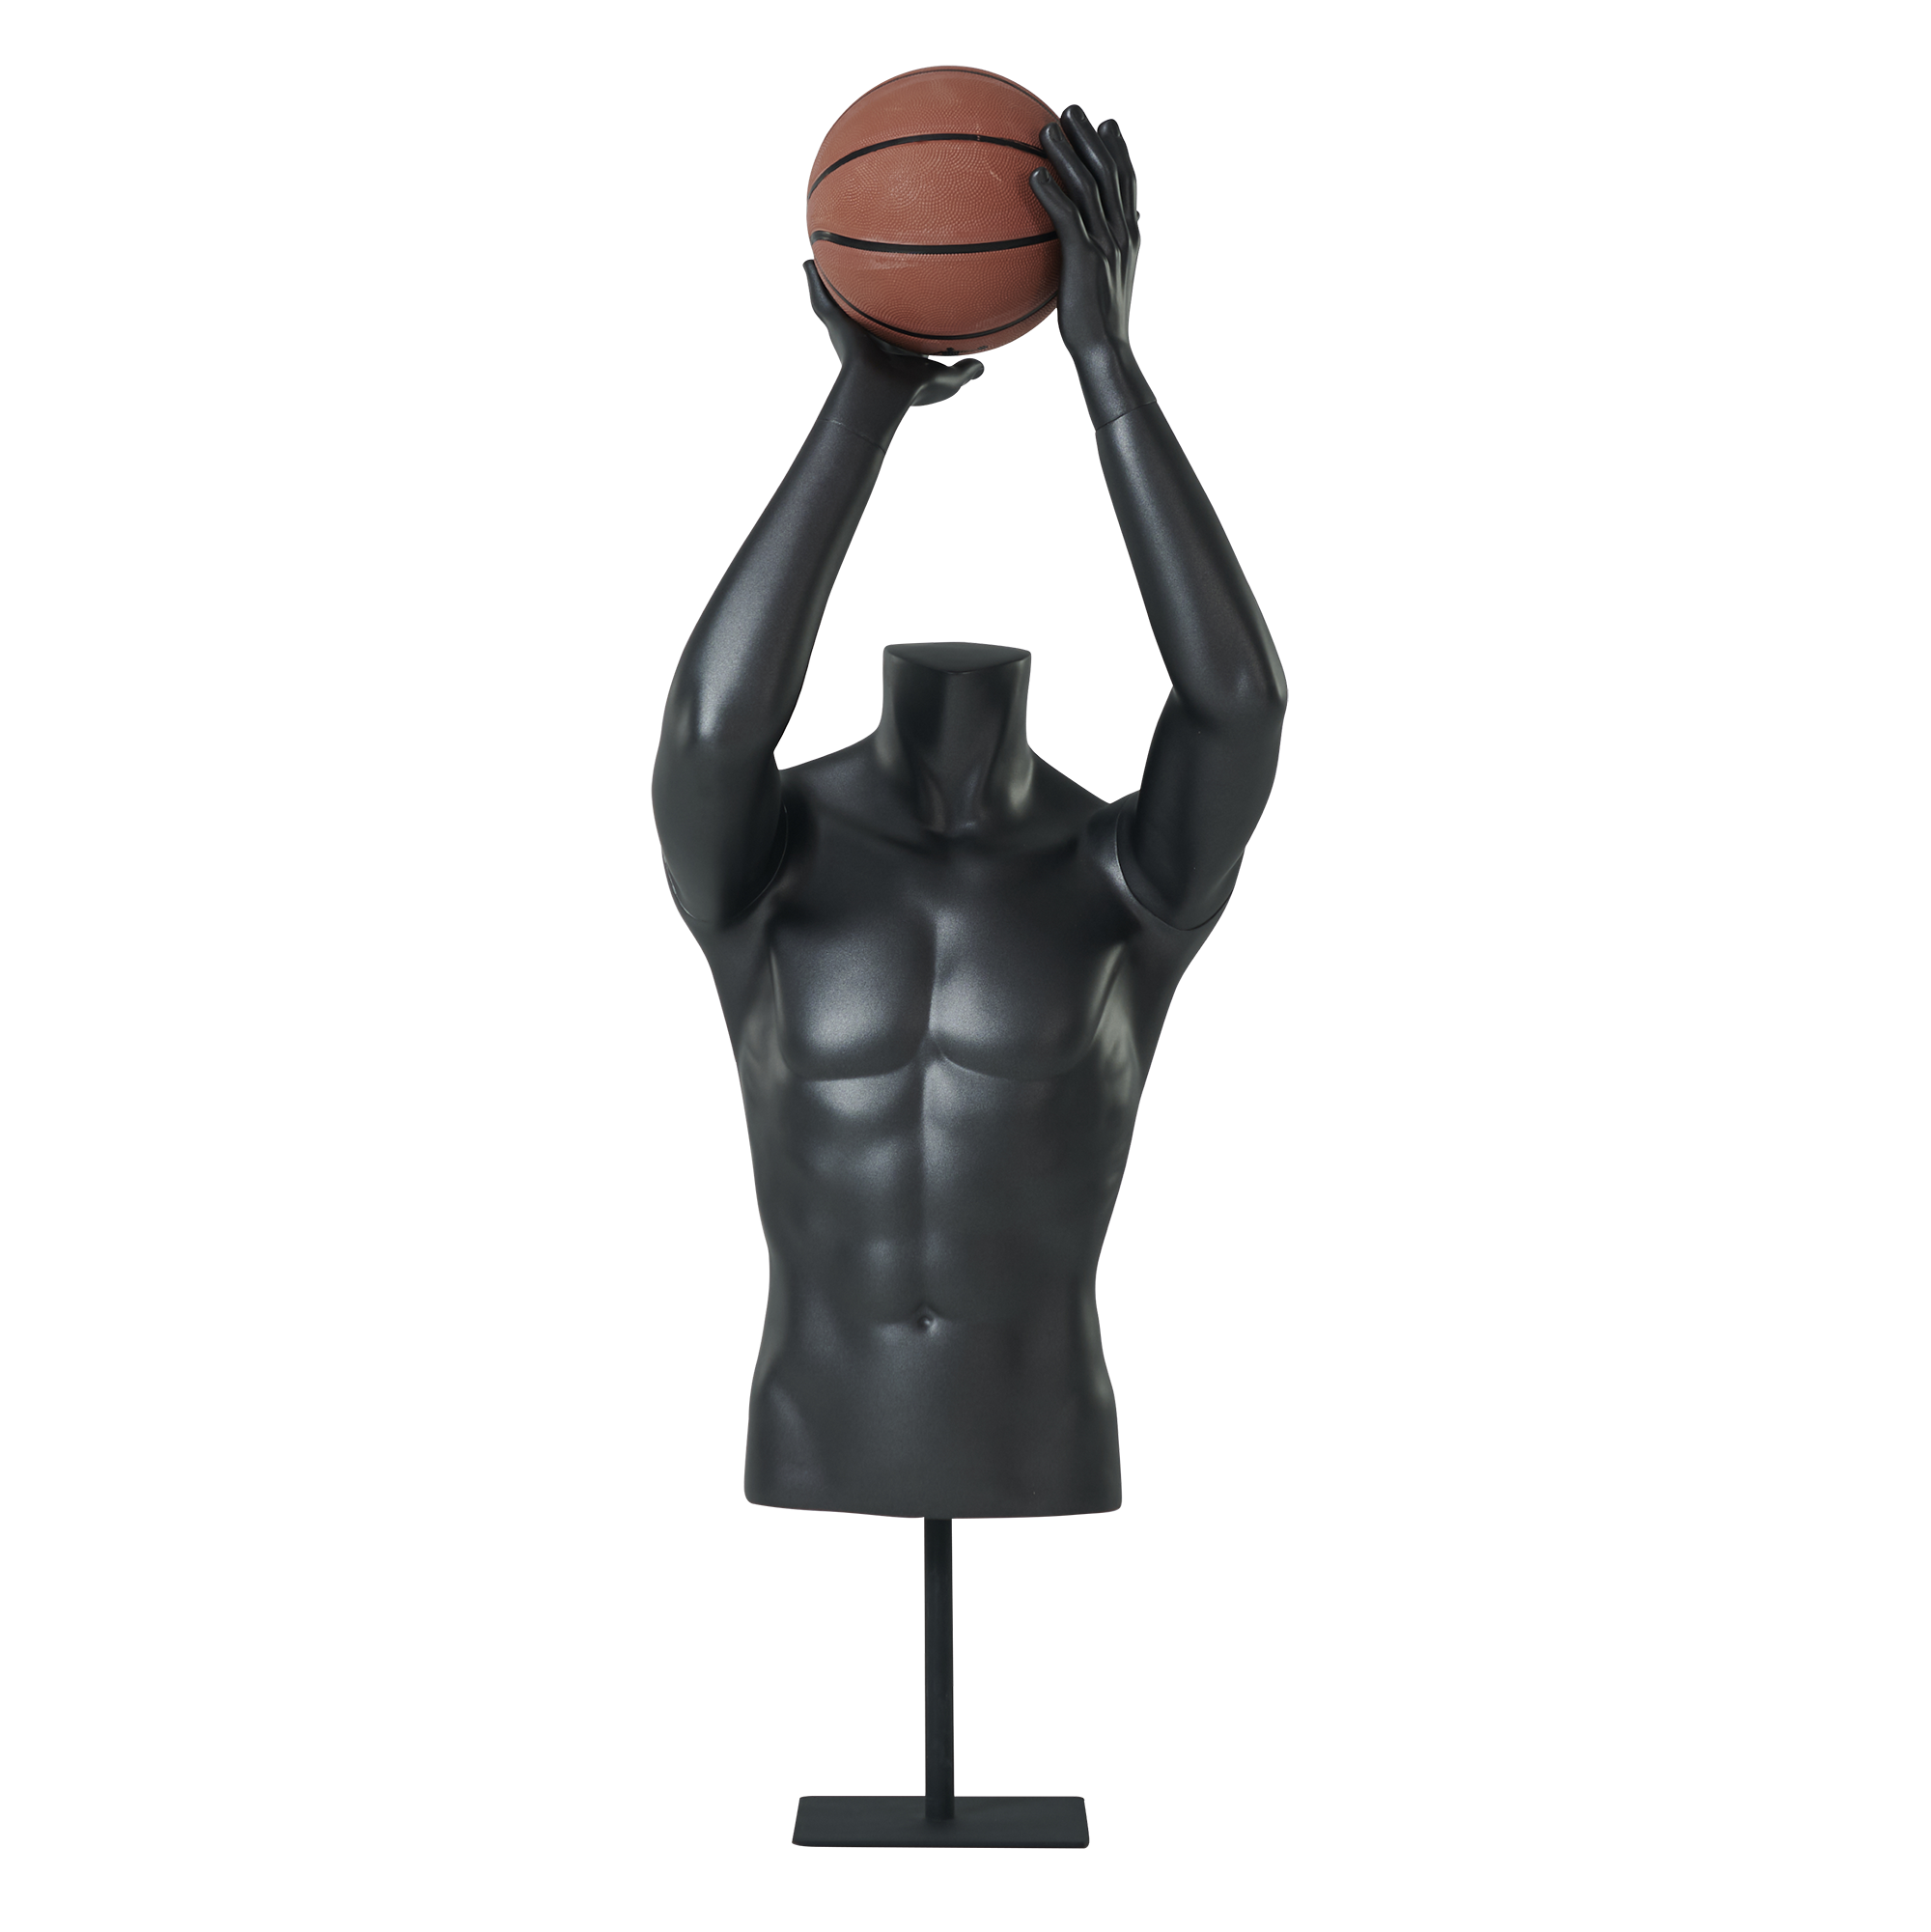 Maniquí de baloncesto masculino con torso superior